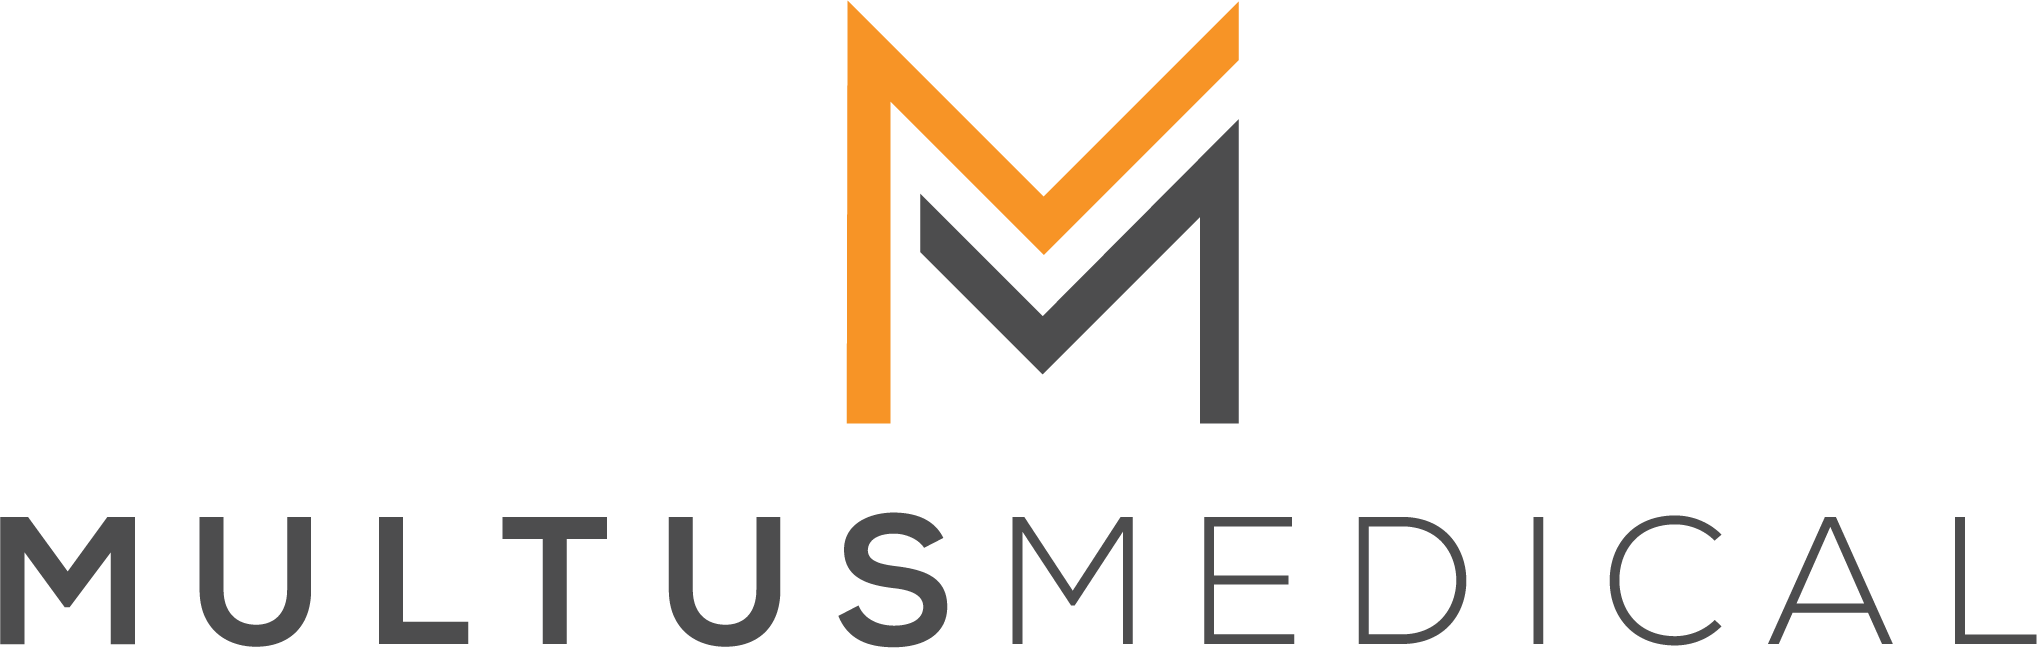 Multus Medical Logo